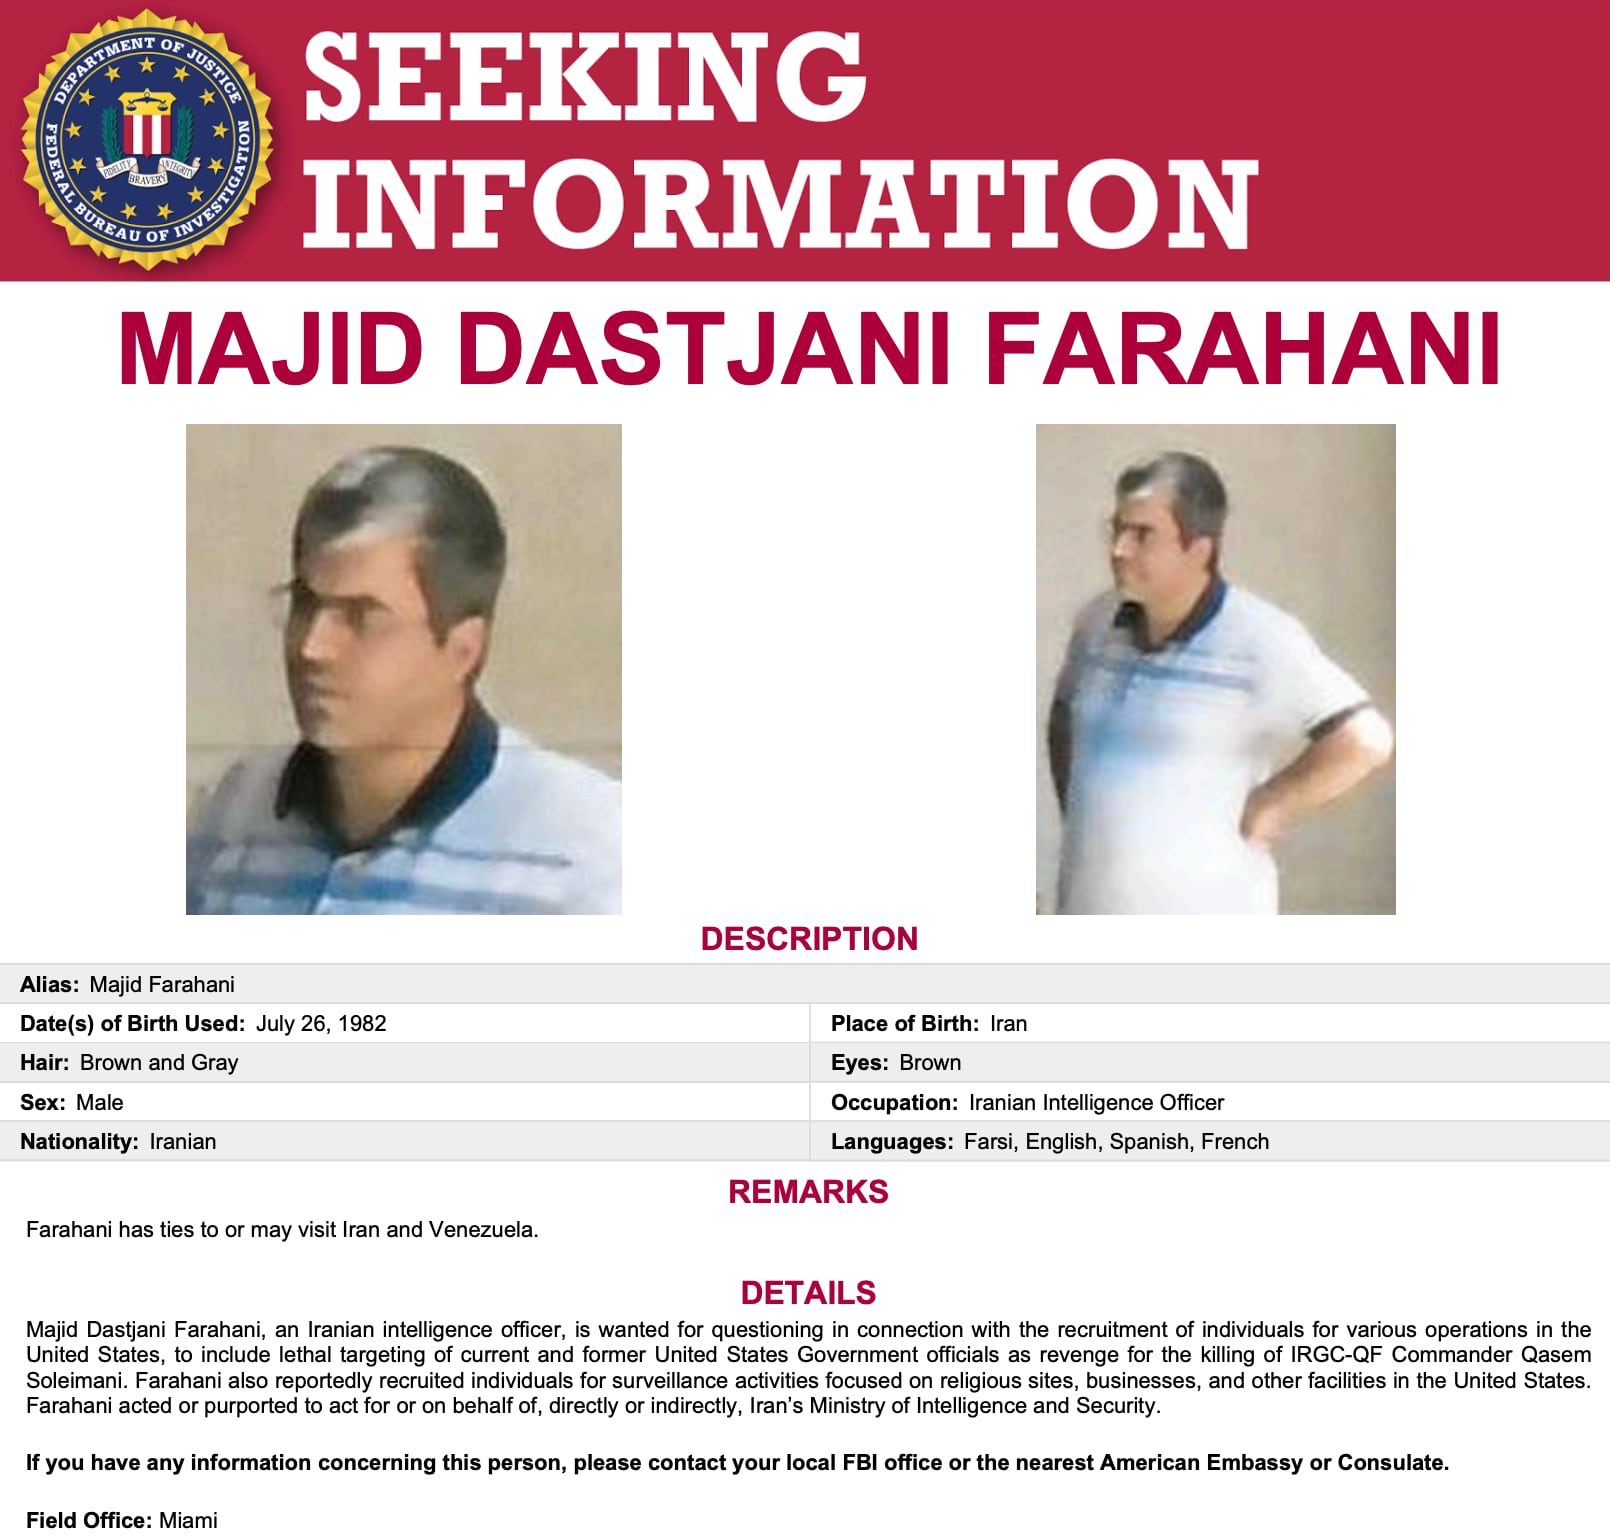 fbi hunting for iranian intelligence officer suspected of plotting to kill us officials